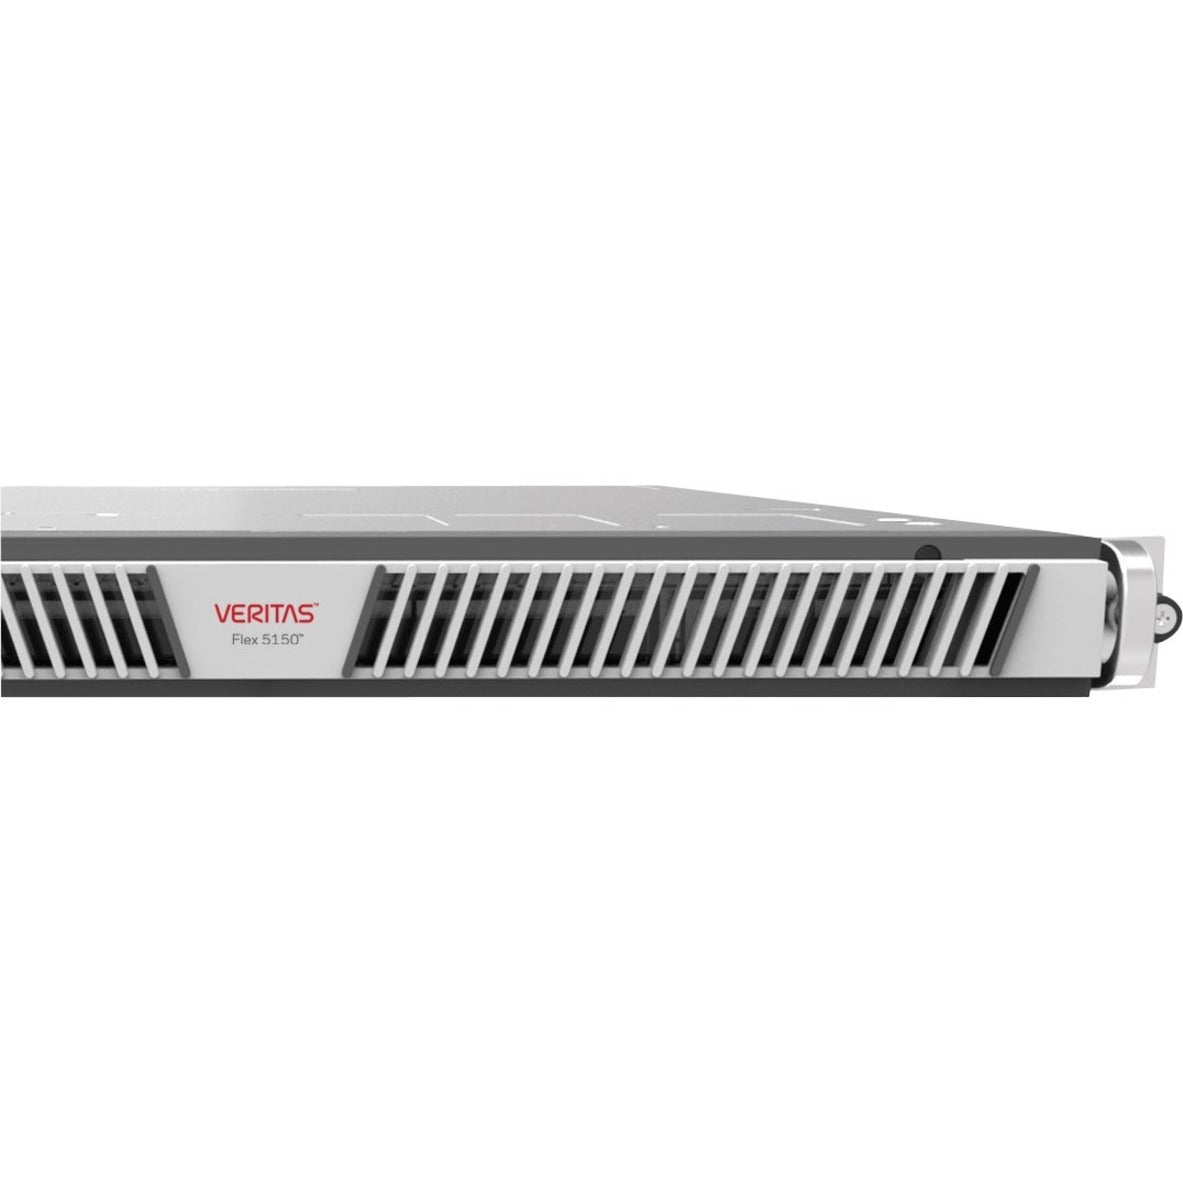 Veritas 26117-M0021 Flex System 5150 NAS Storage System, 15TB Total Hard Drive Capacity Installed, 12Gb/s SAS Controller, 6 Network (RJ-45) Ports